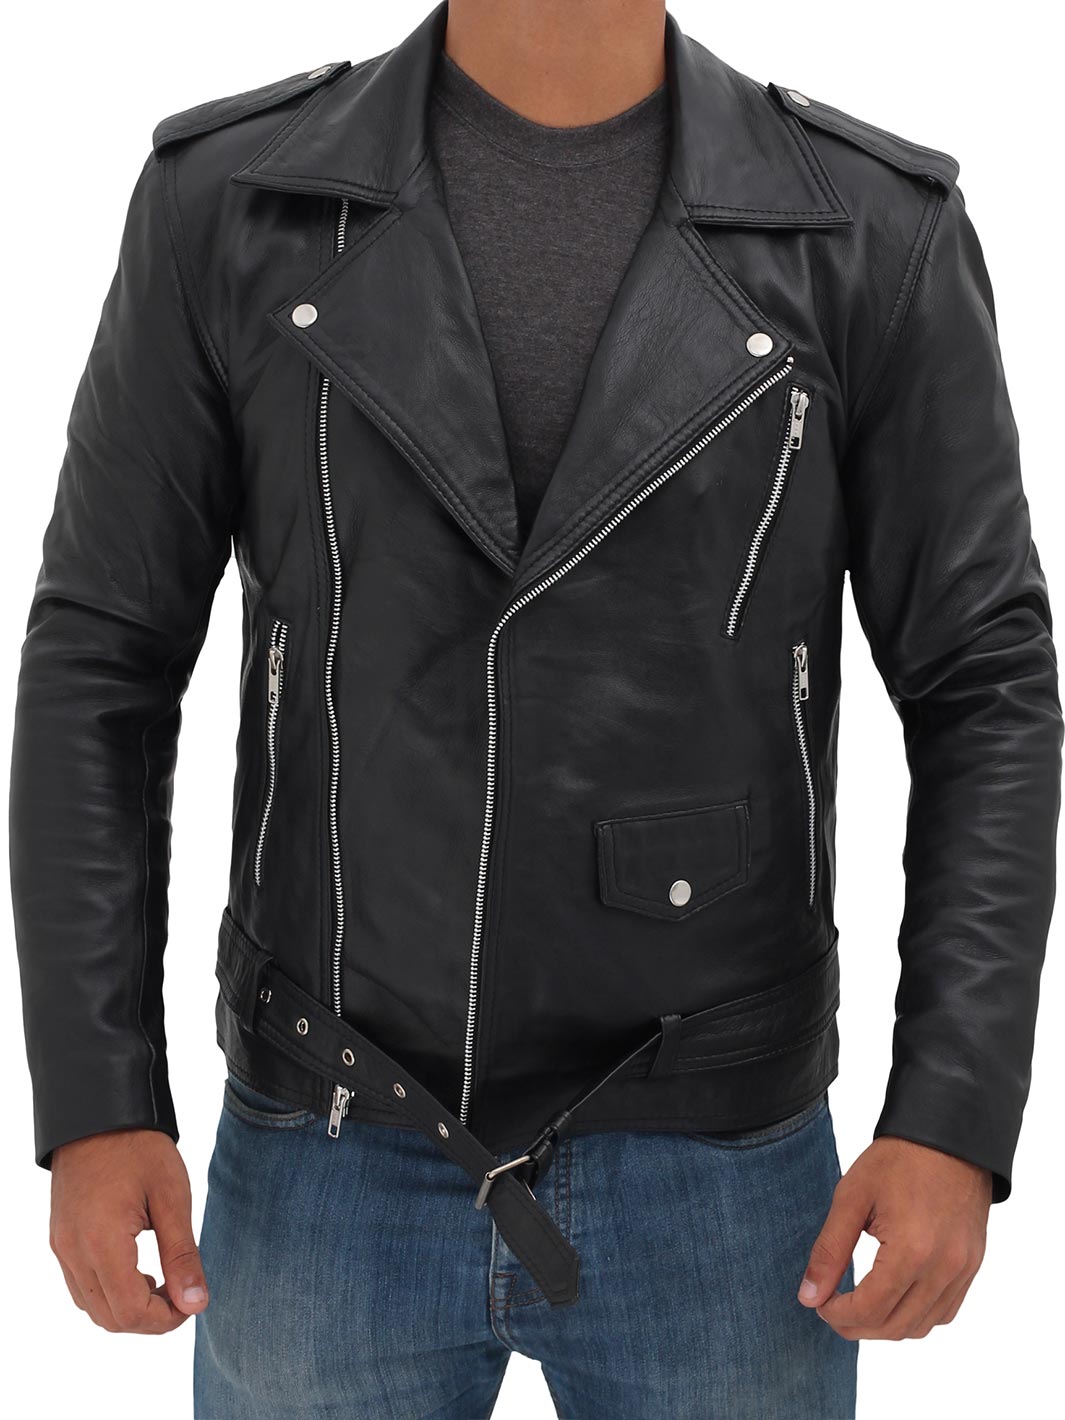 Mens Black Leather Jacket 